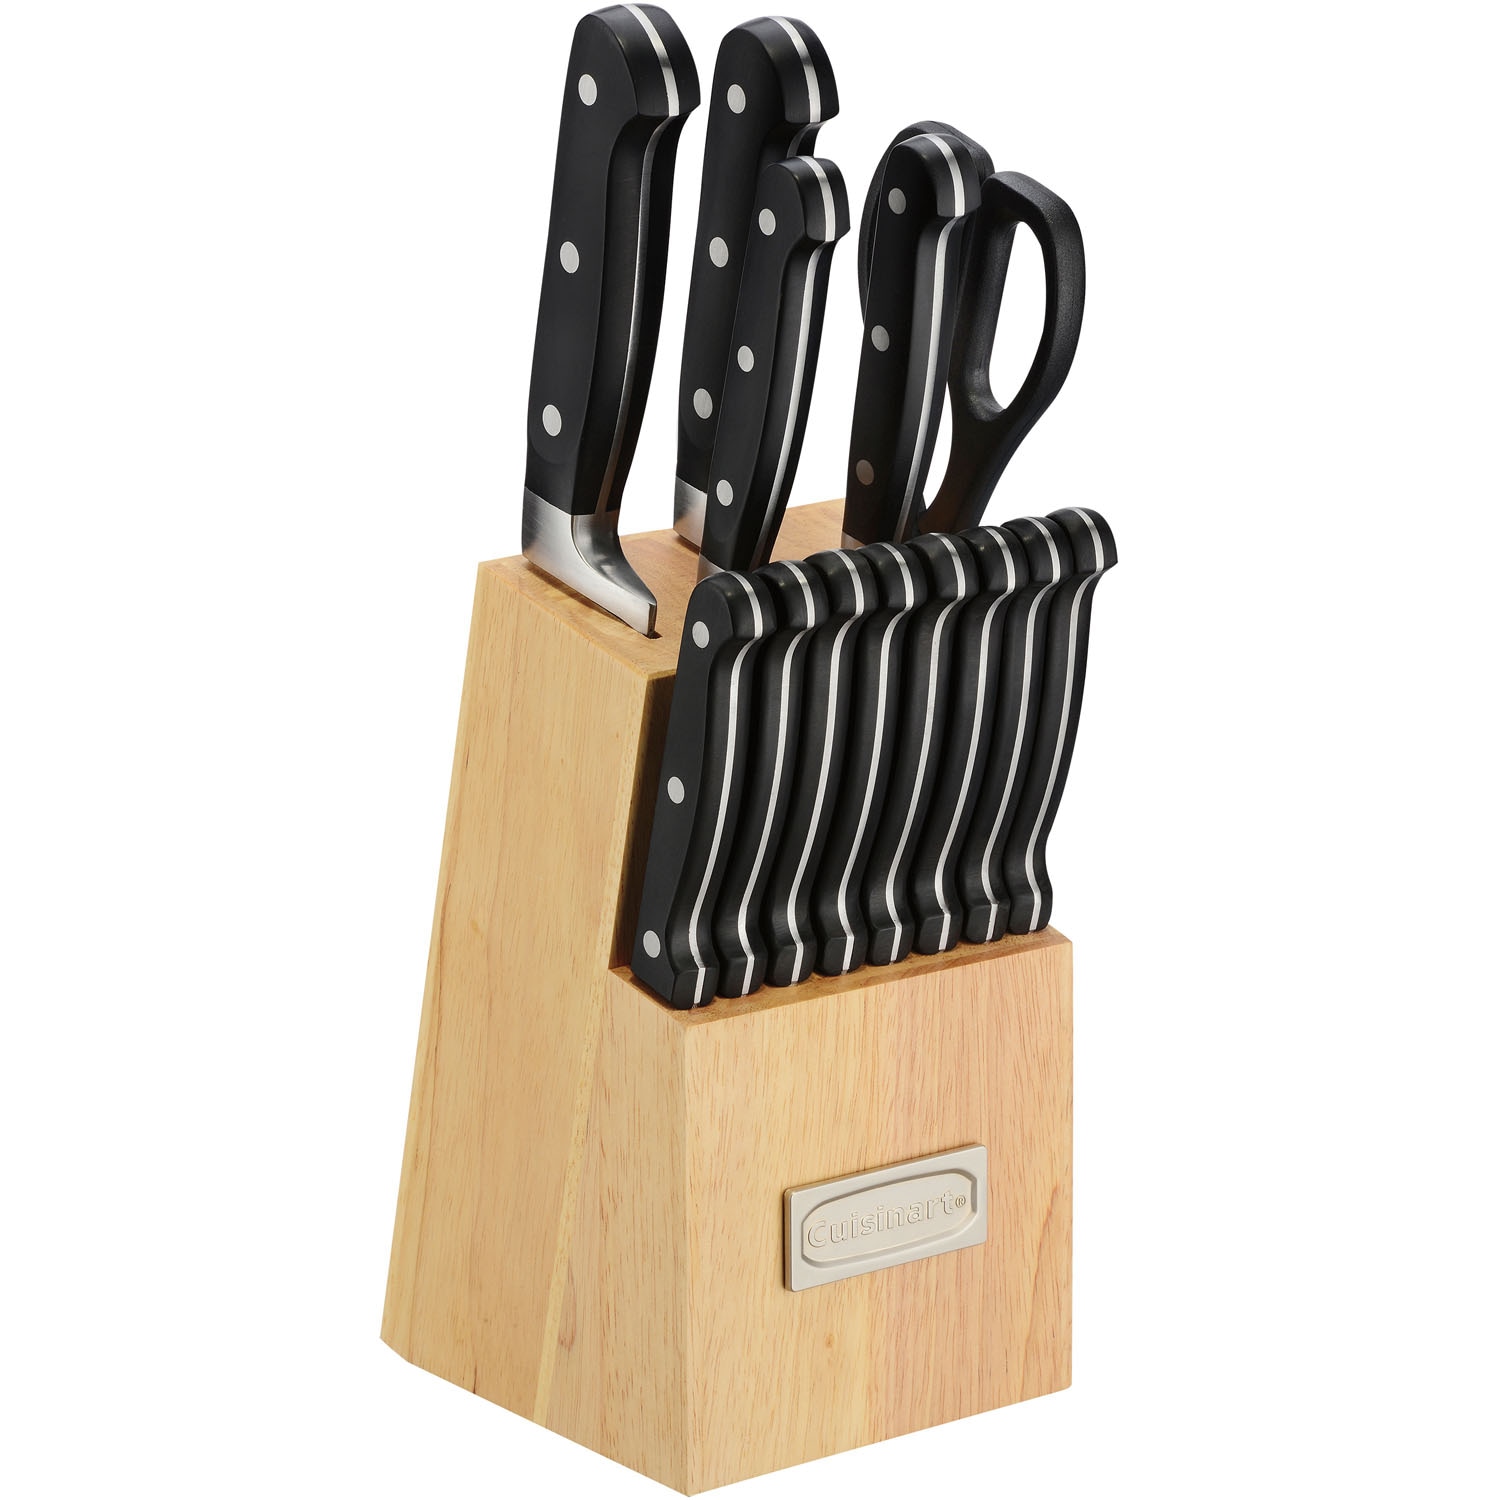 Classic 15-Piece Triple Rivet Cutlery Set with Wooden Block, Cuisinart